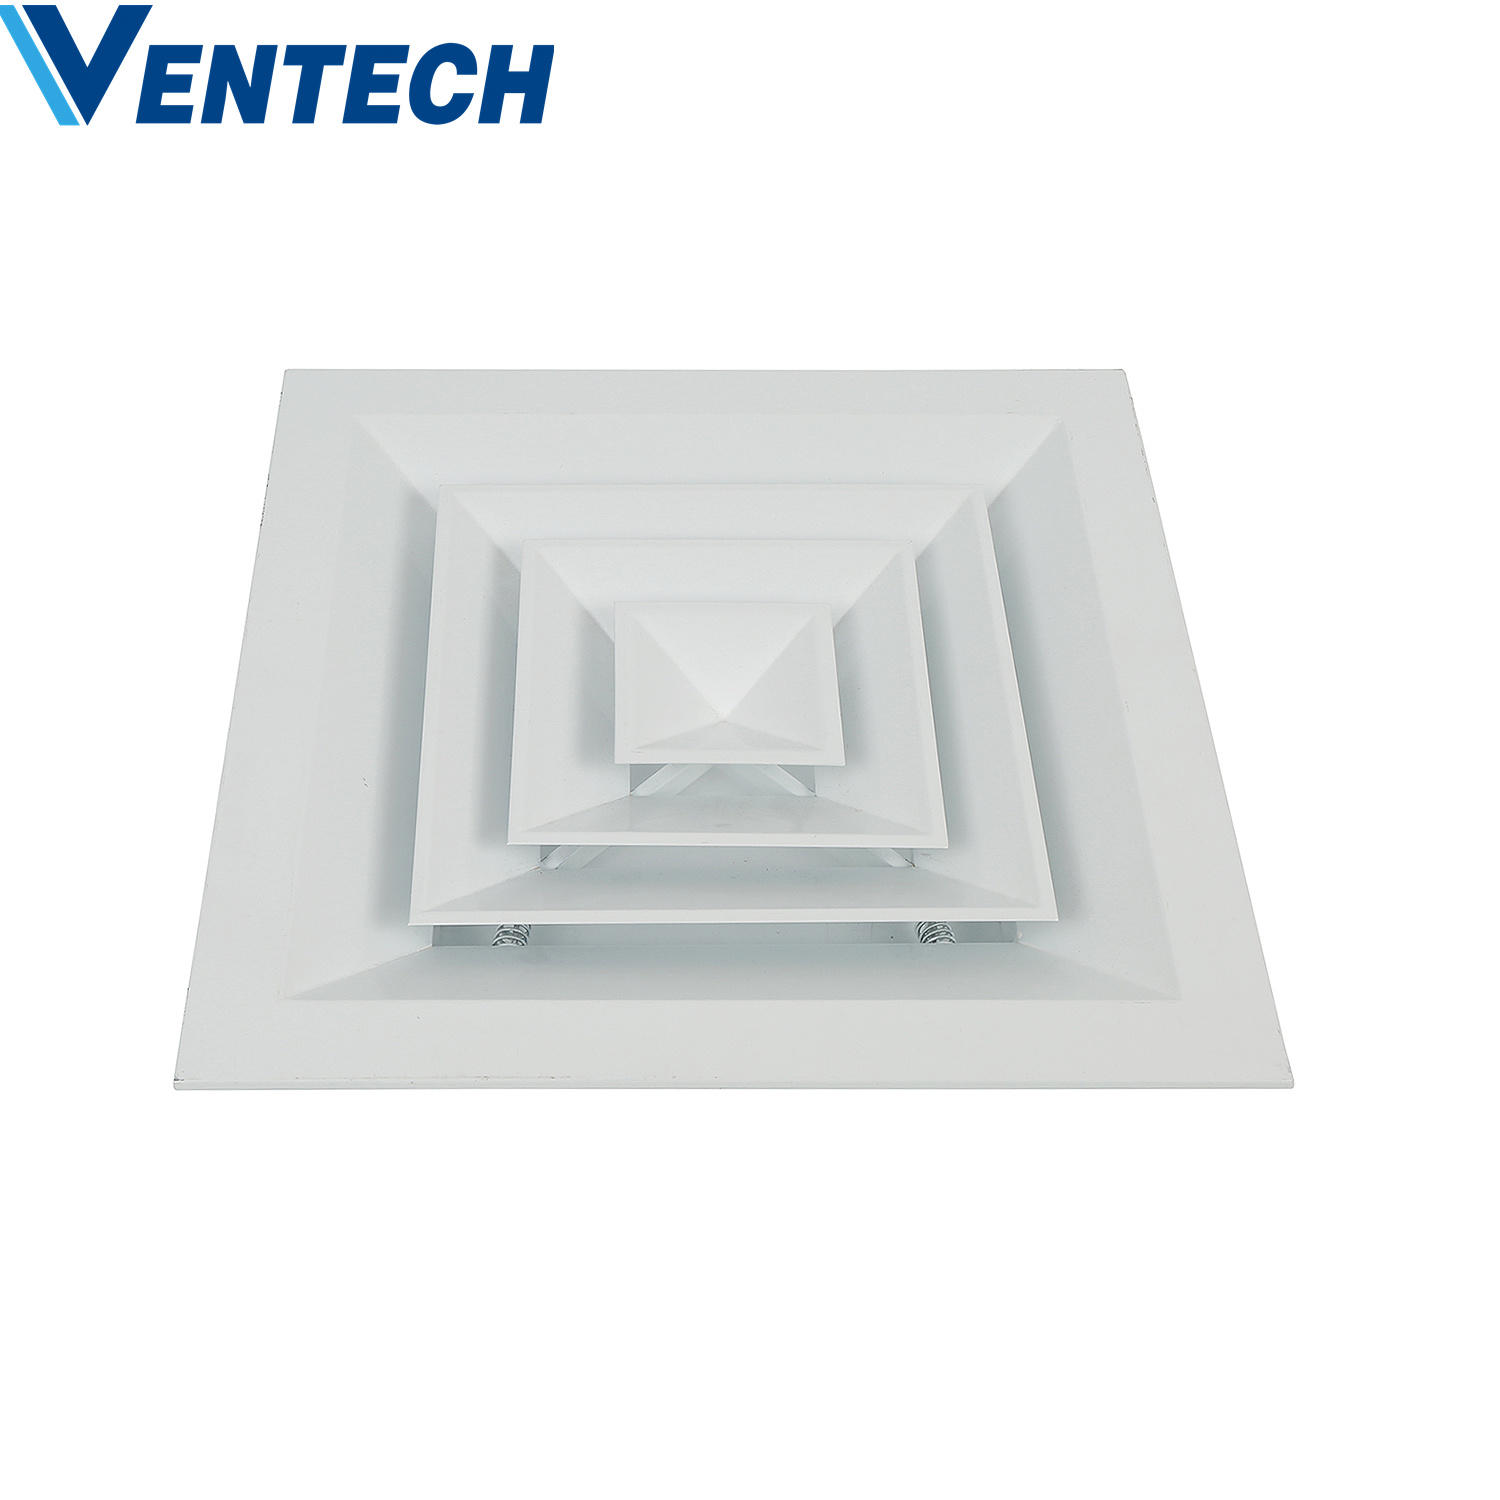 Hvac System Diffuser Plaque ABS Air Conditioning Aluminum Square Ceiling Diffusers For Ventilation